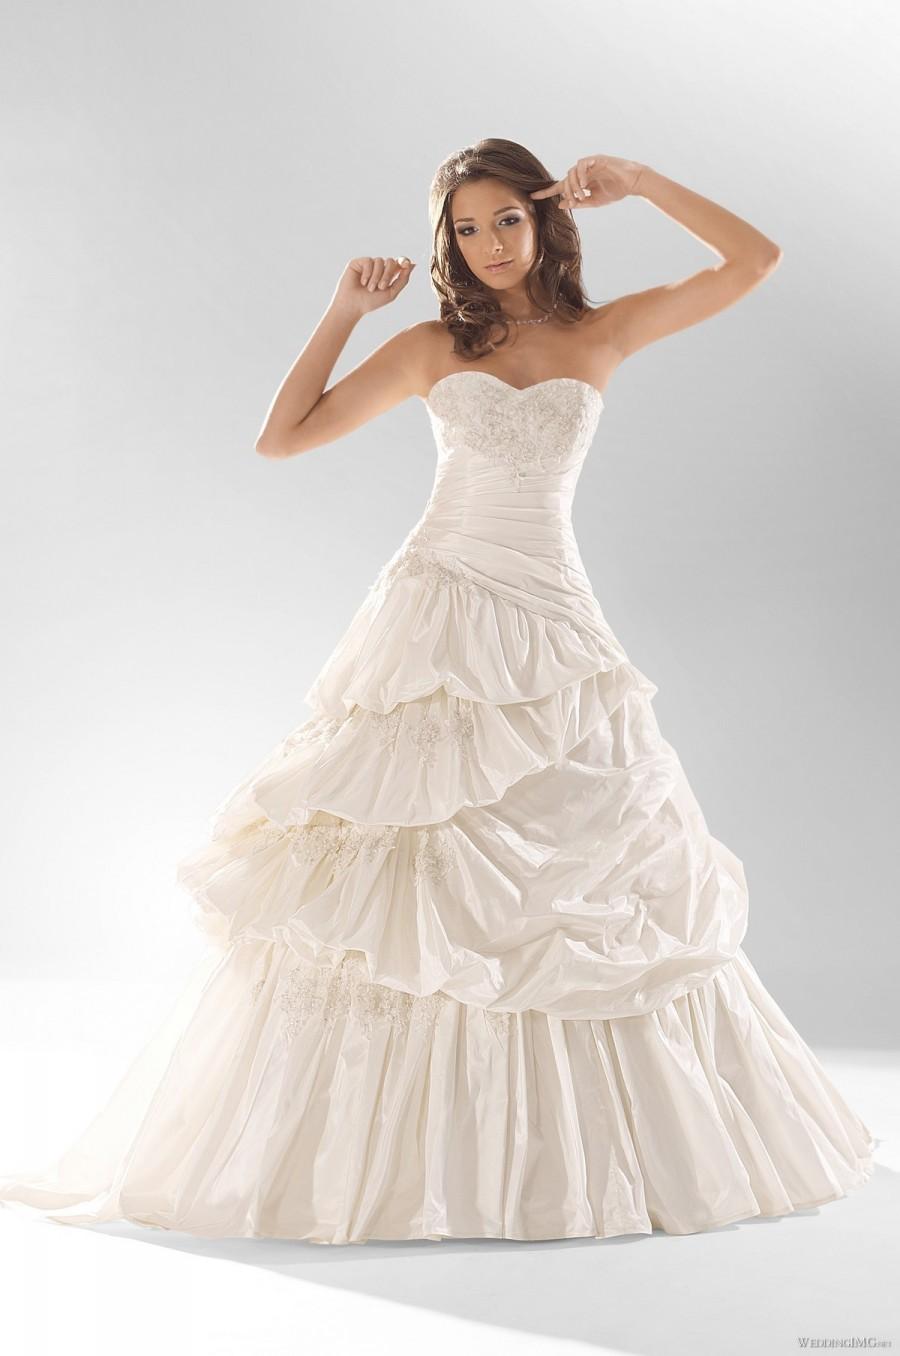 زفاف - Marietta - Guiana - Glamour - Glamorous Wedding Dresses